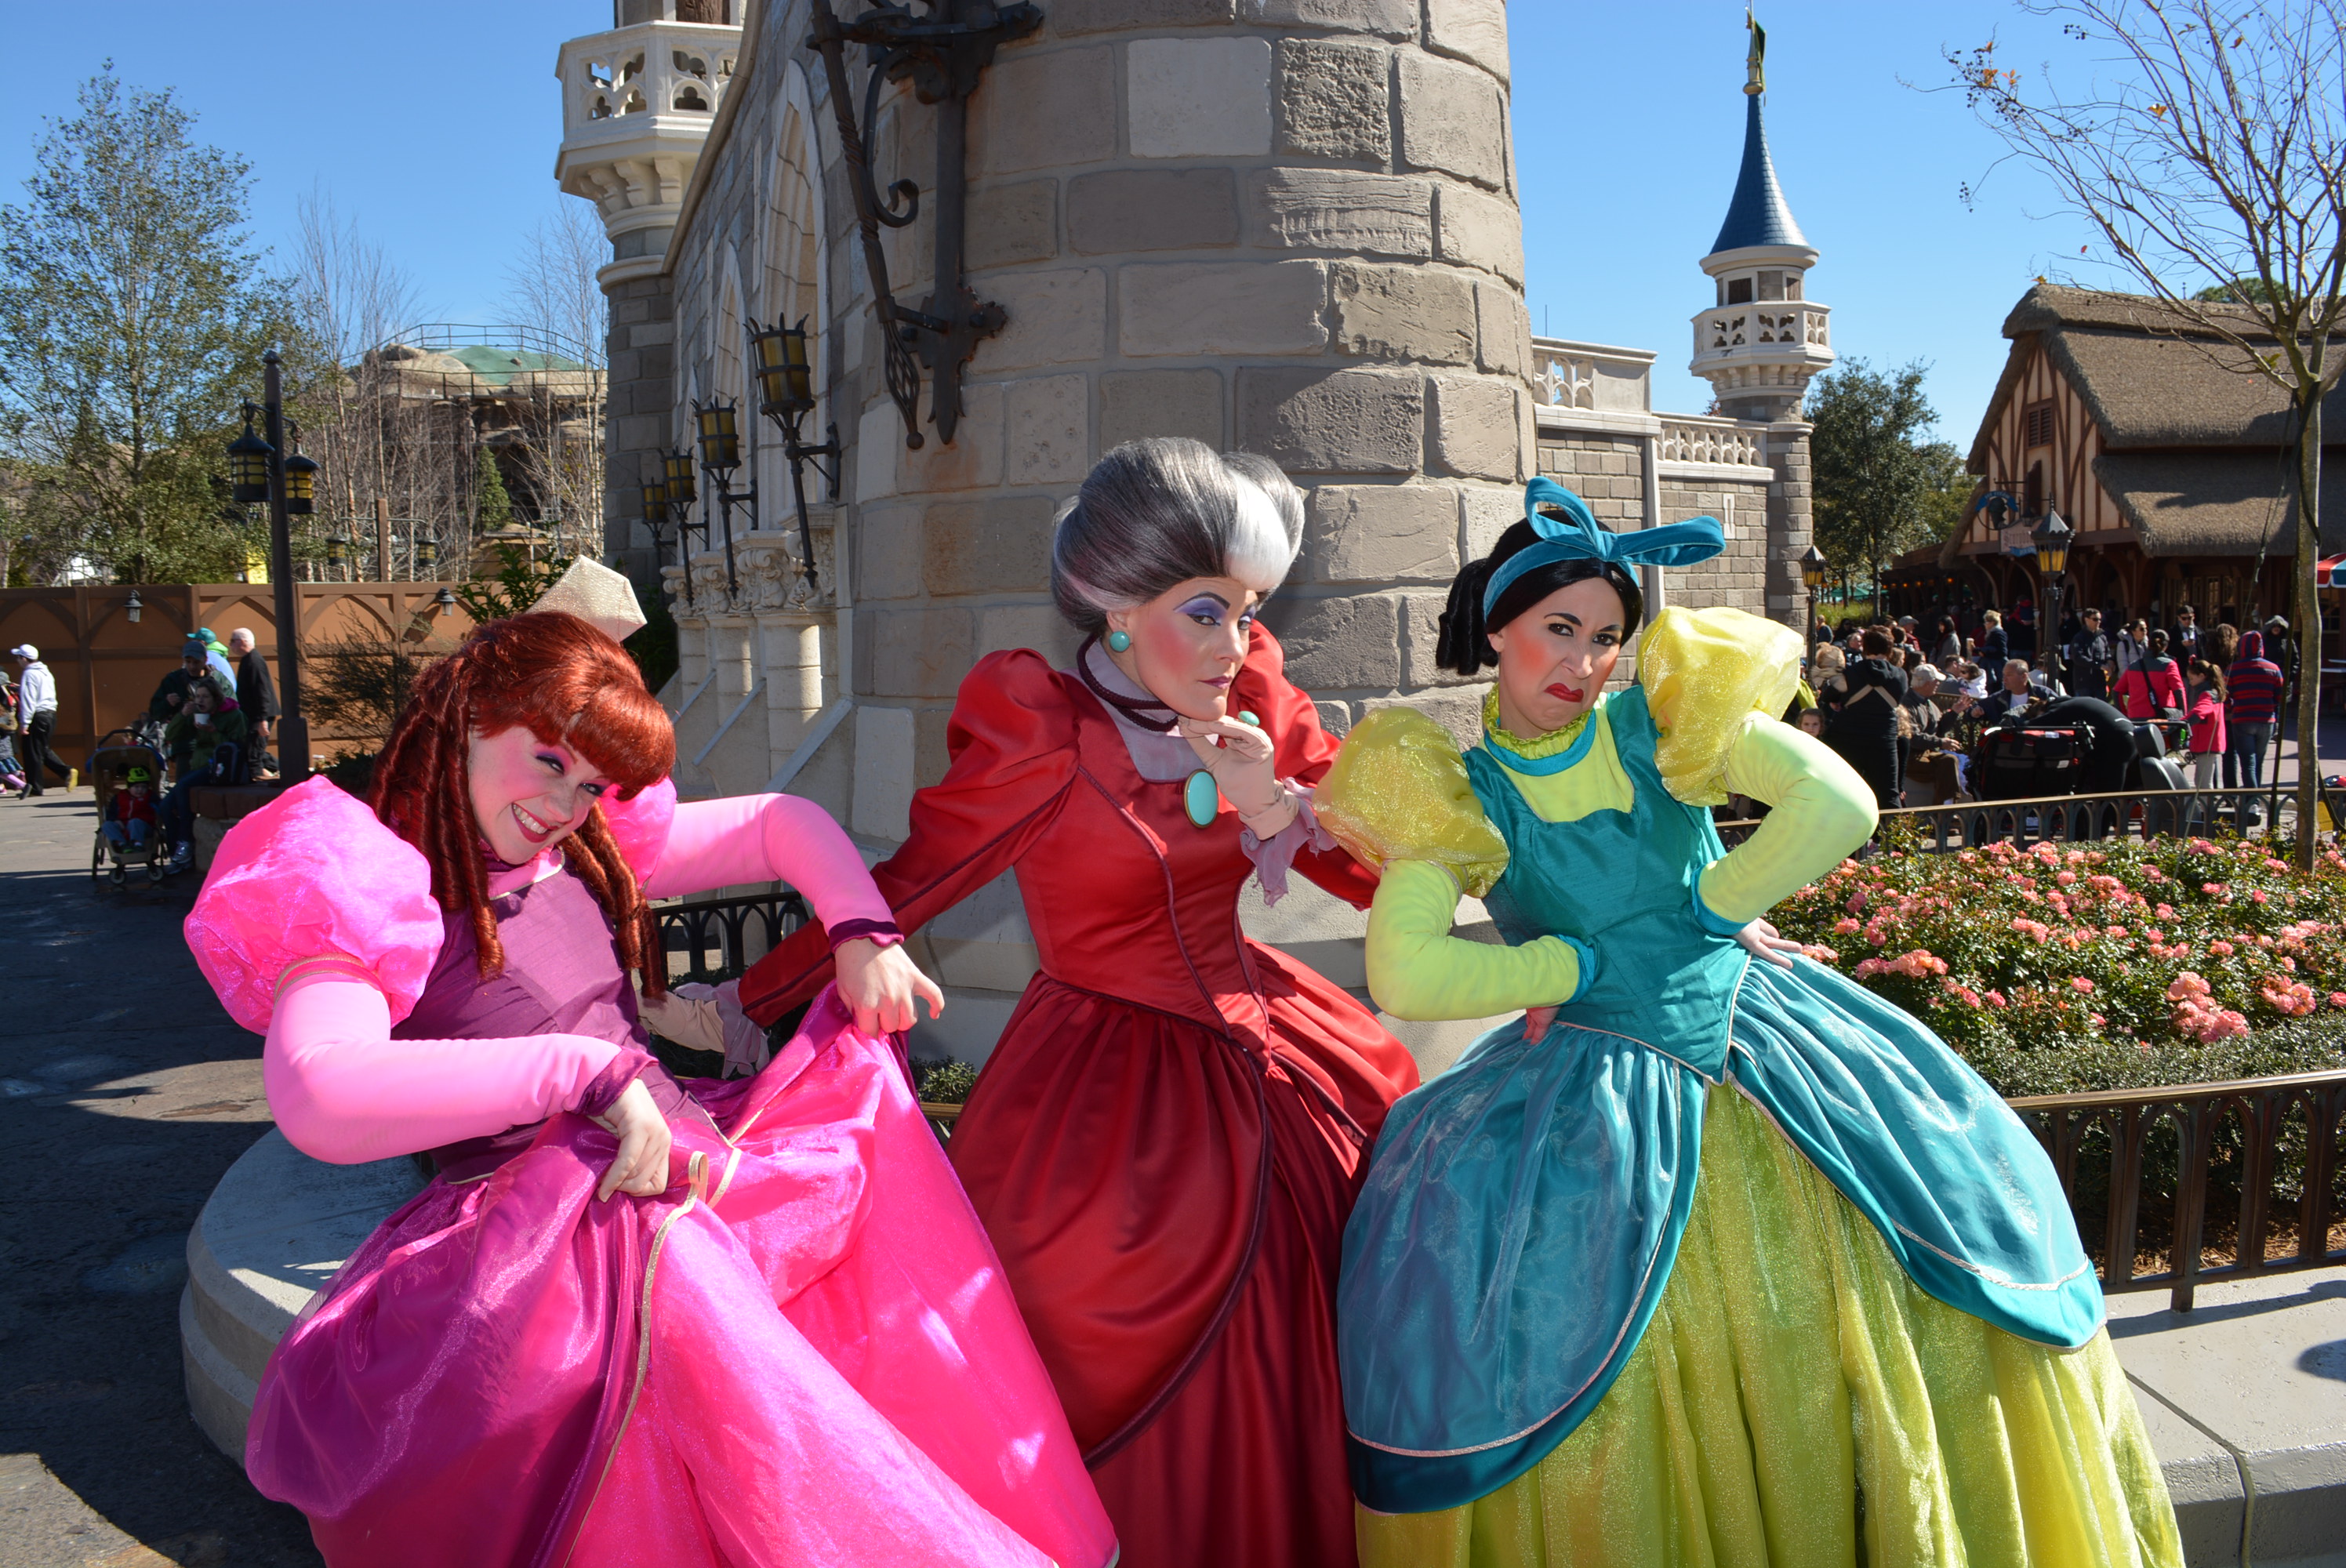 Walt Disney World, Magic Kingdom, Fantasyland, Anastasia Drizella Lady Tremaine, Cinderella Step Sisters, Meet and Greet